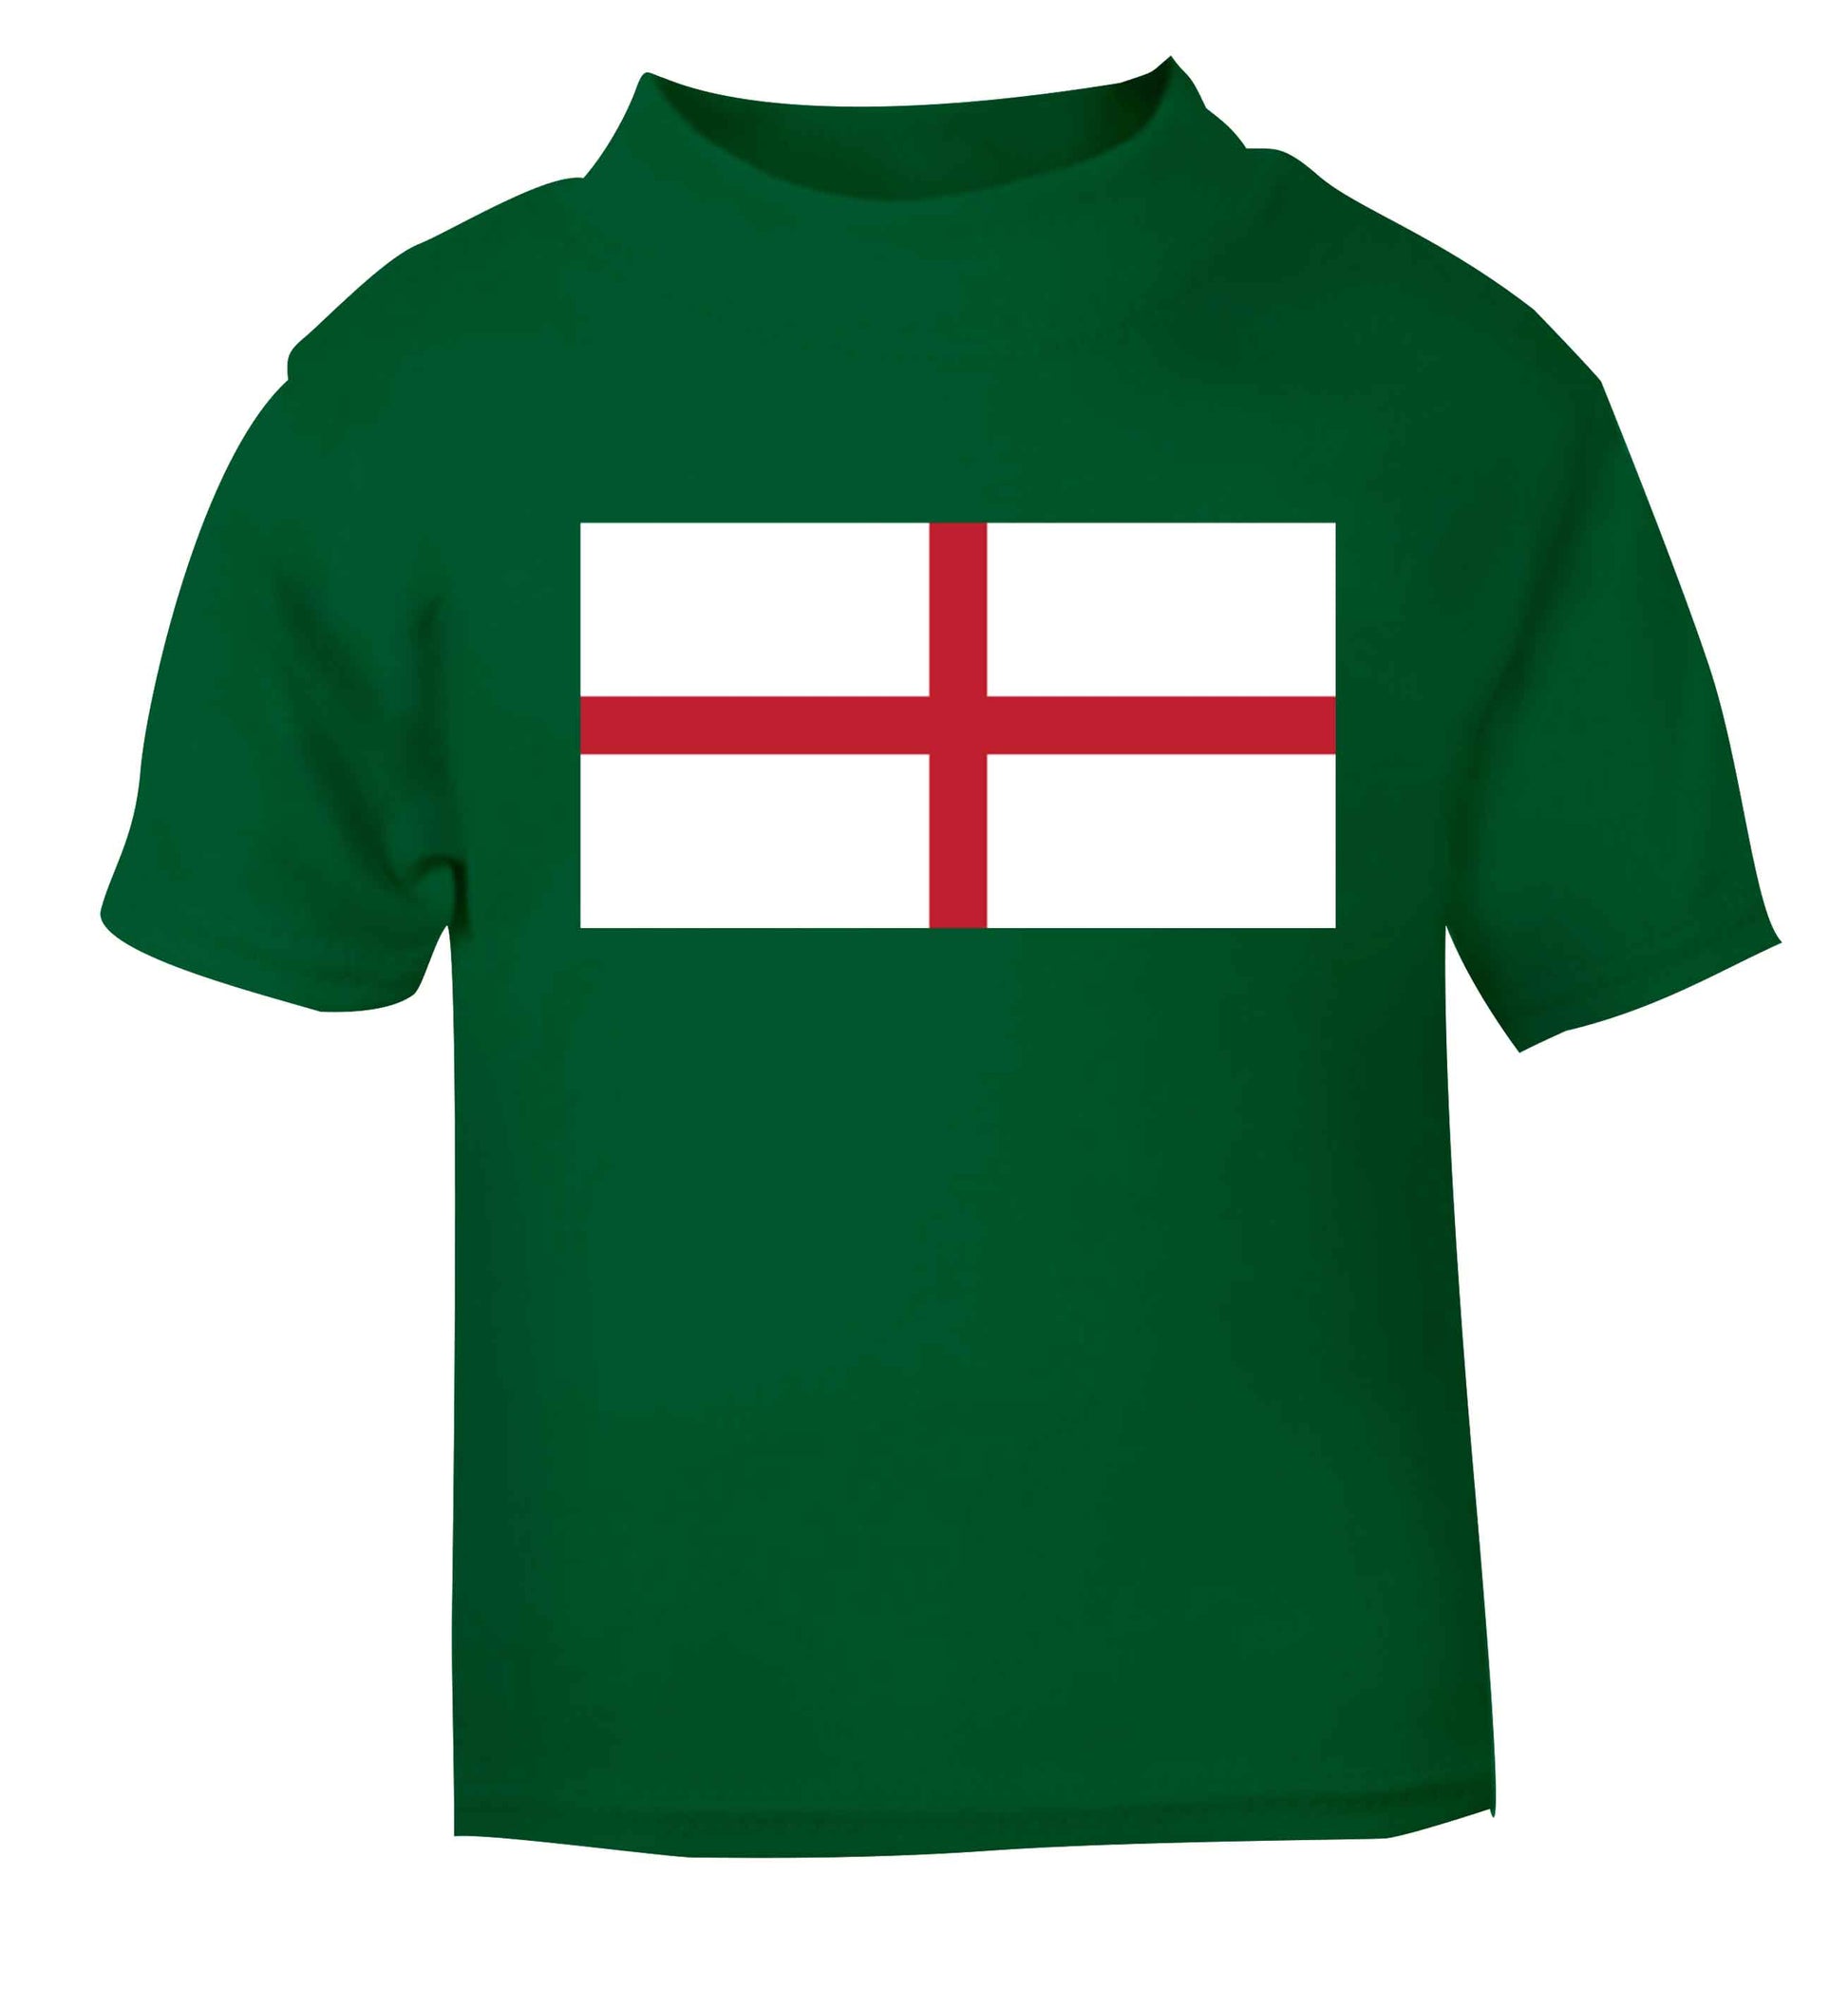 England Flag green baby toddler Tshirt 2 Years